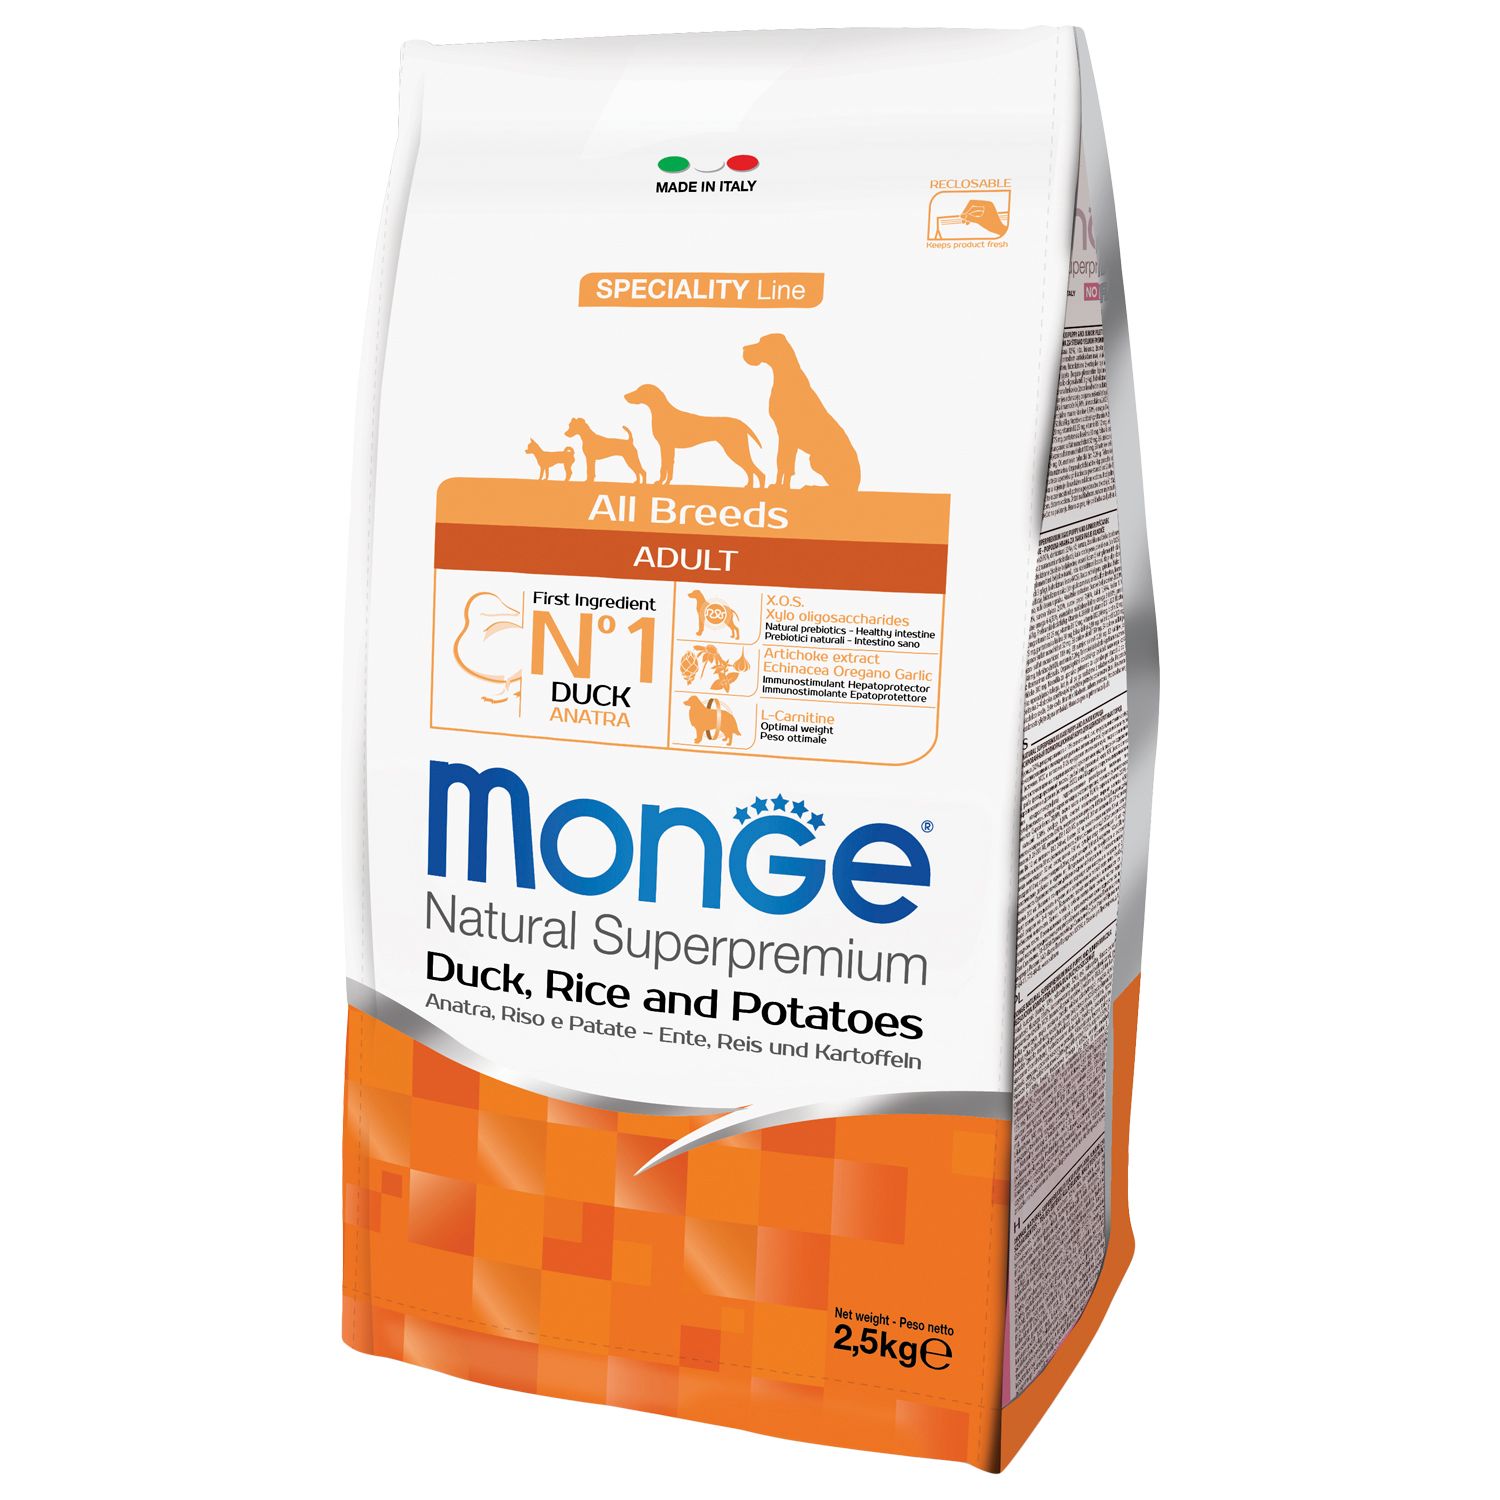 Monge Dog Speciality All Breeds Утка/рис для собак 2,5 кг 2